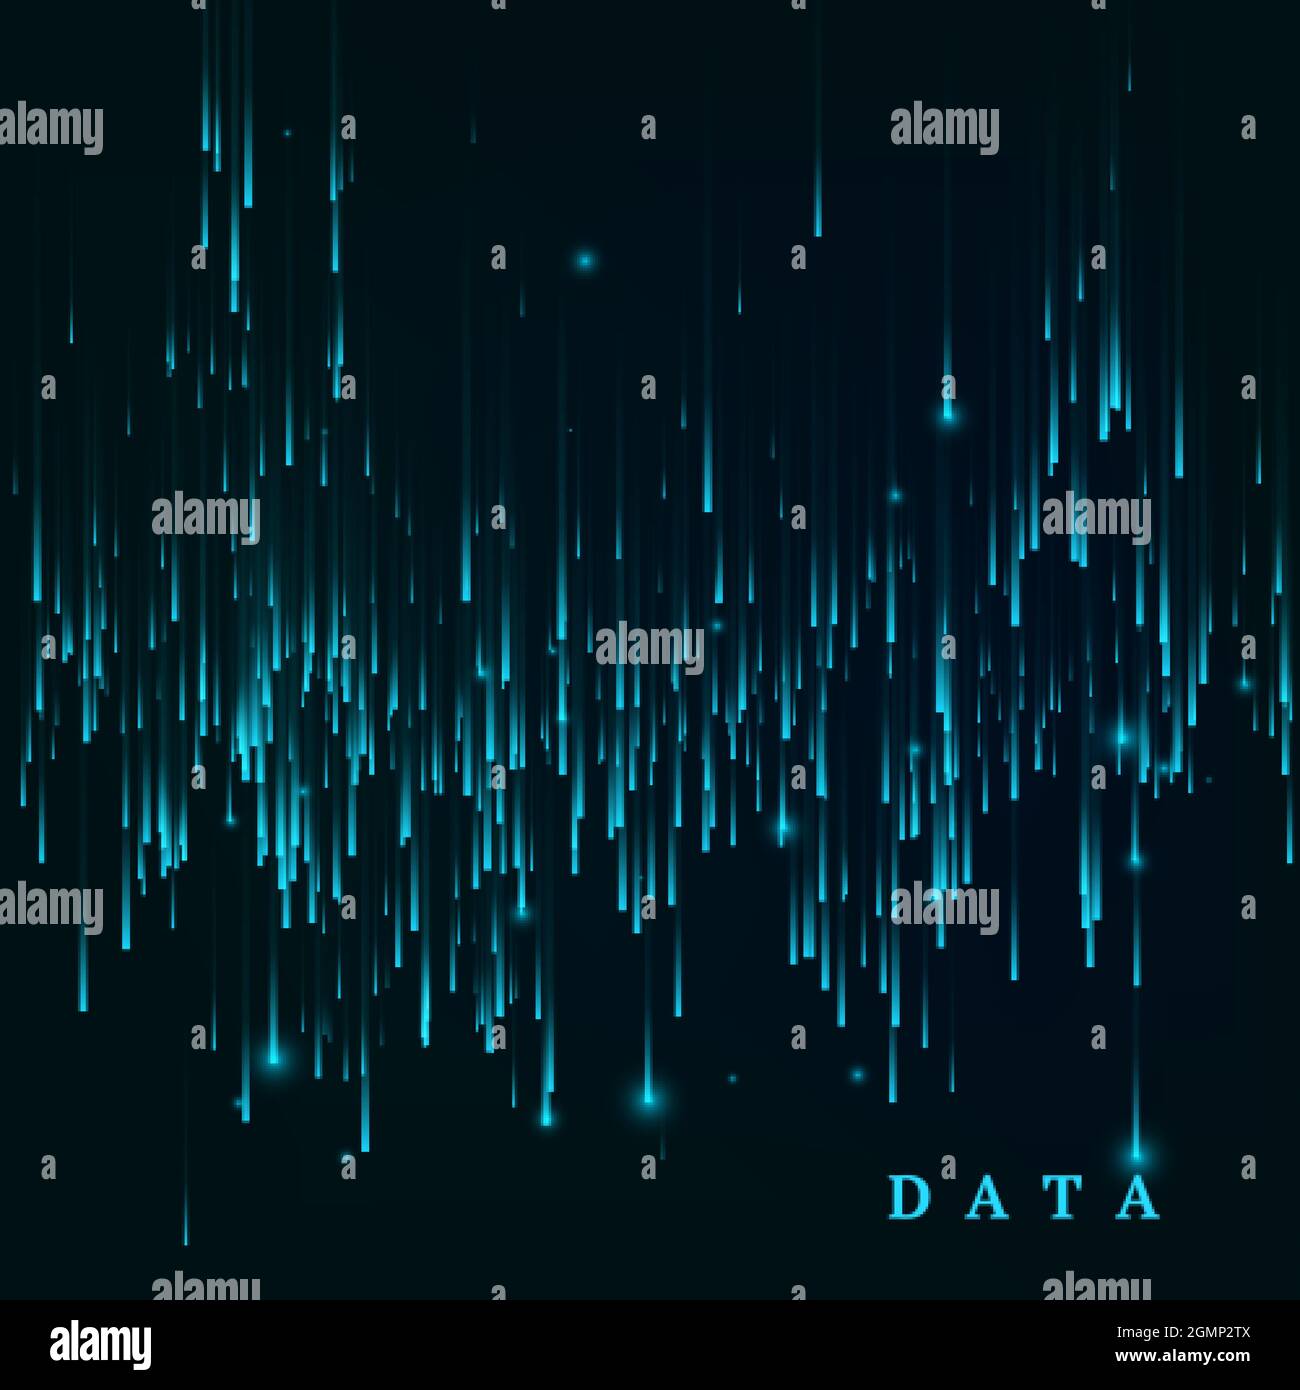 Random generated data block stream. Abstract matrix. Big data visualisation. Sci-fi or futuristic abstract background in blue colors. Vertor illustrat Stock Vector